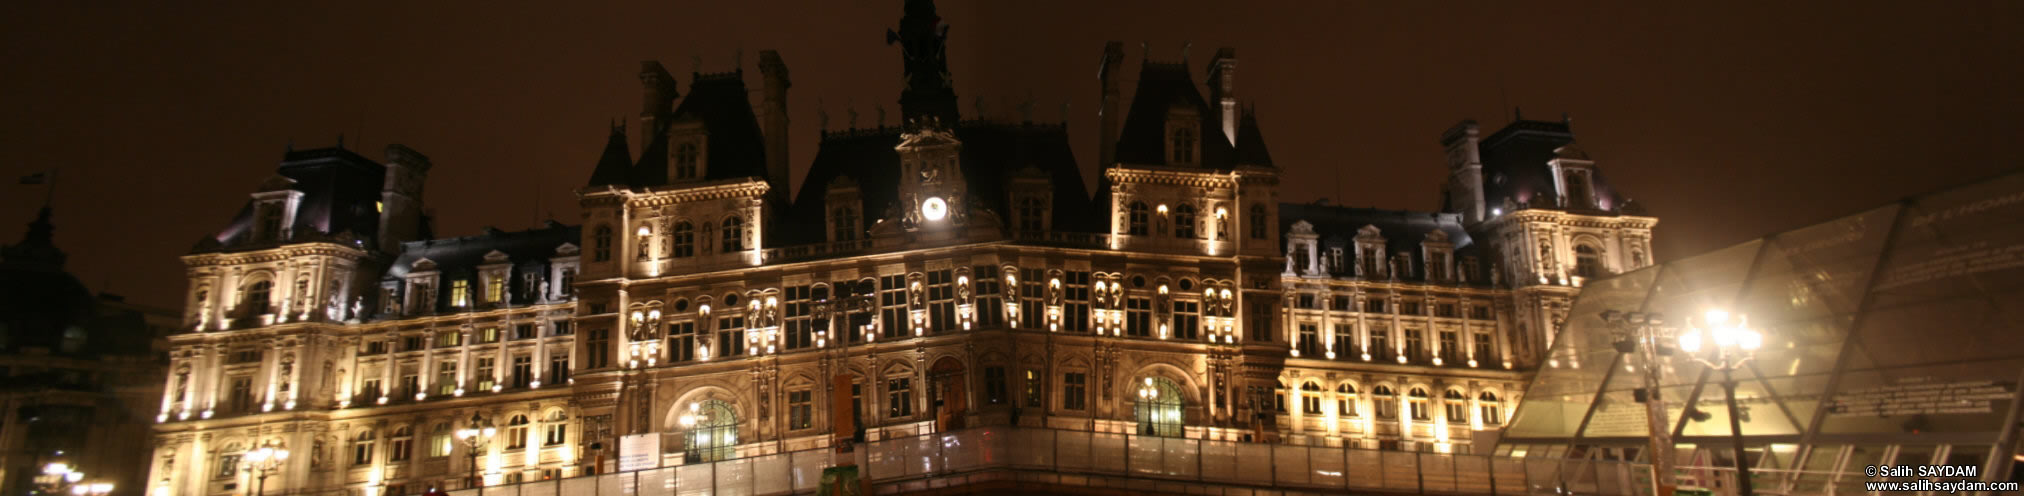 City Hall of Paris (Hôtel de Ville) Panorama 4 (At Night) (Paris, France)